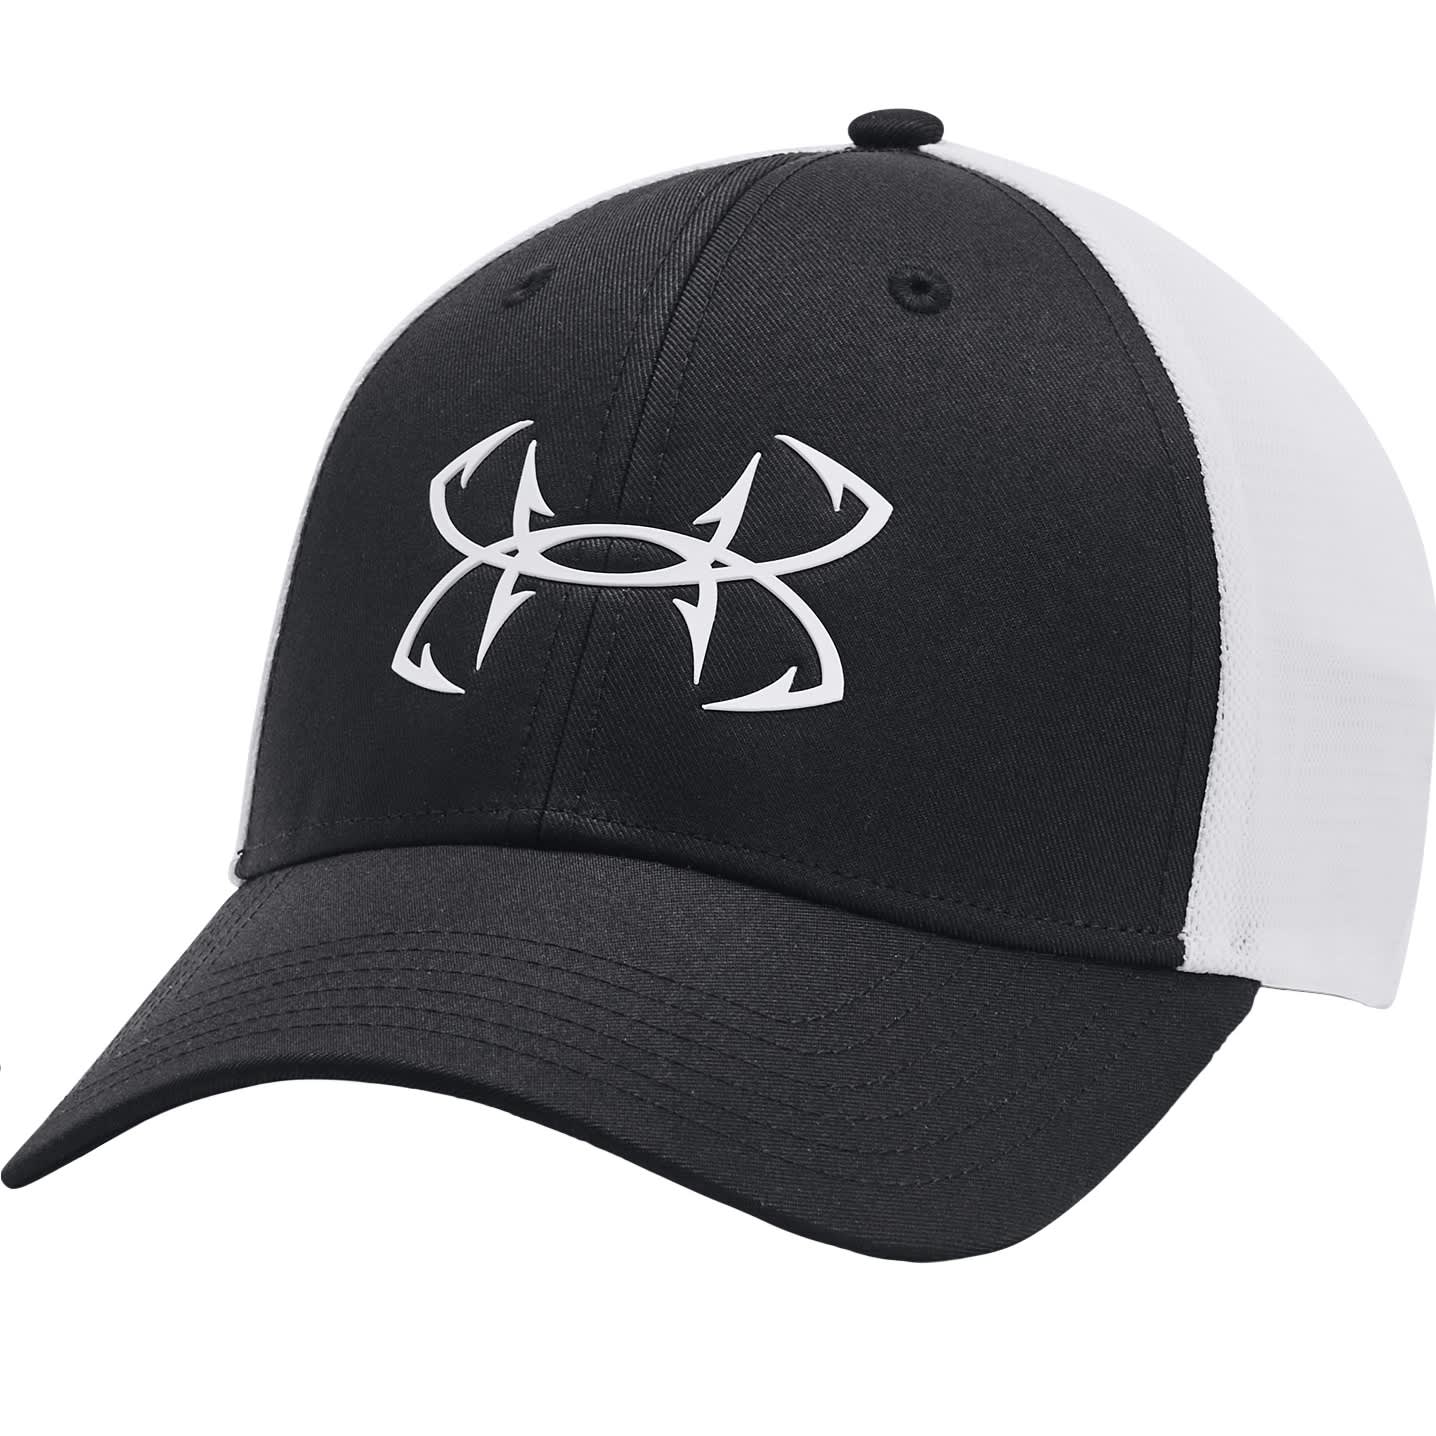 Under Armour Men's Fish Hunter Mesh Hat/Cap - Black, L/XL, Stretch Fit